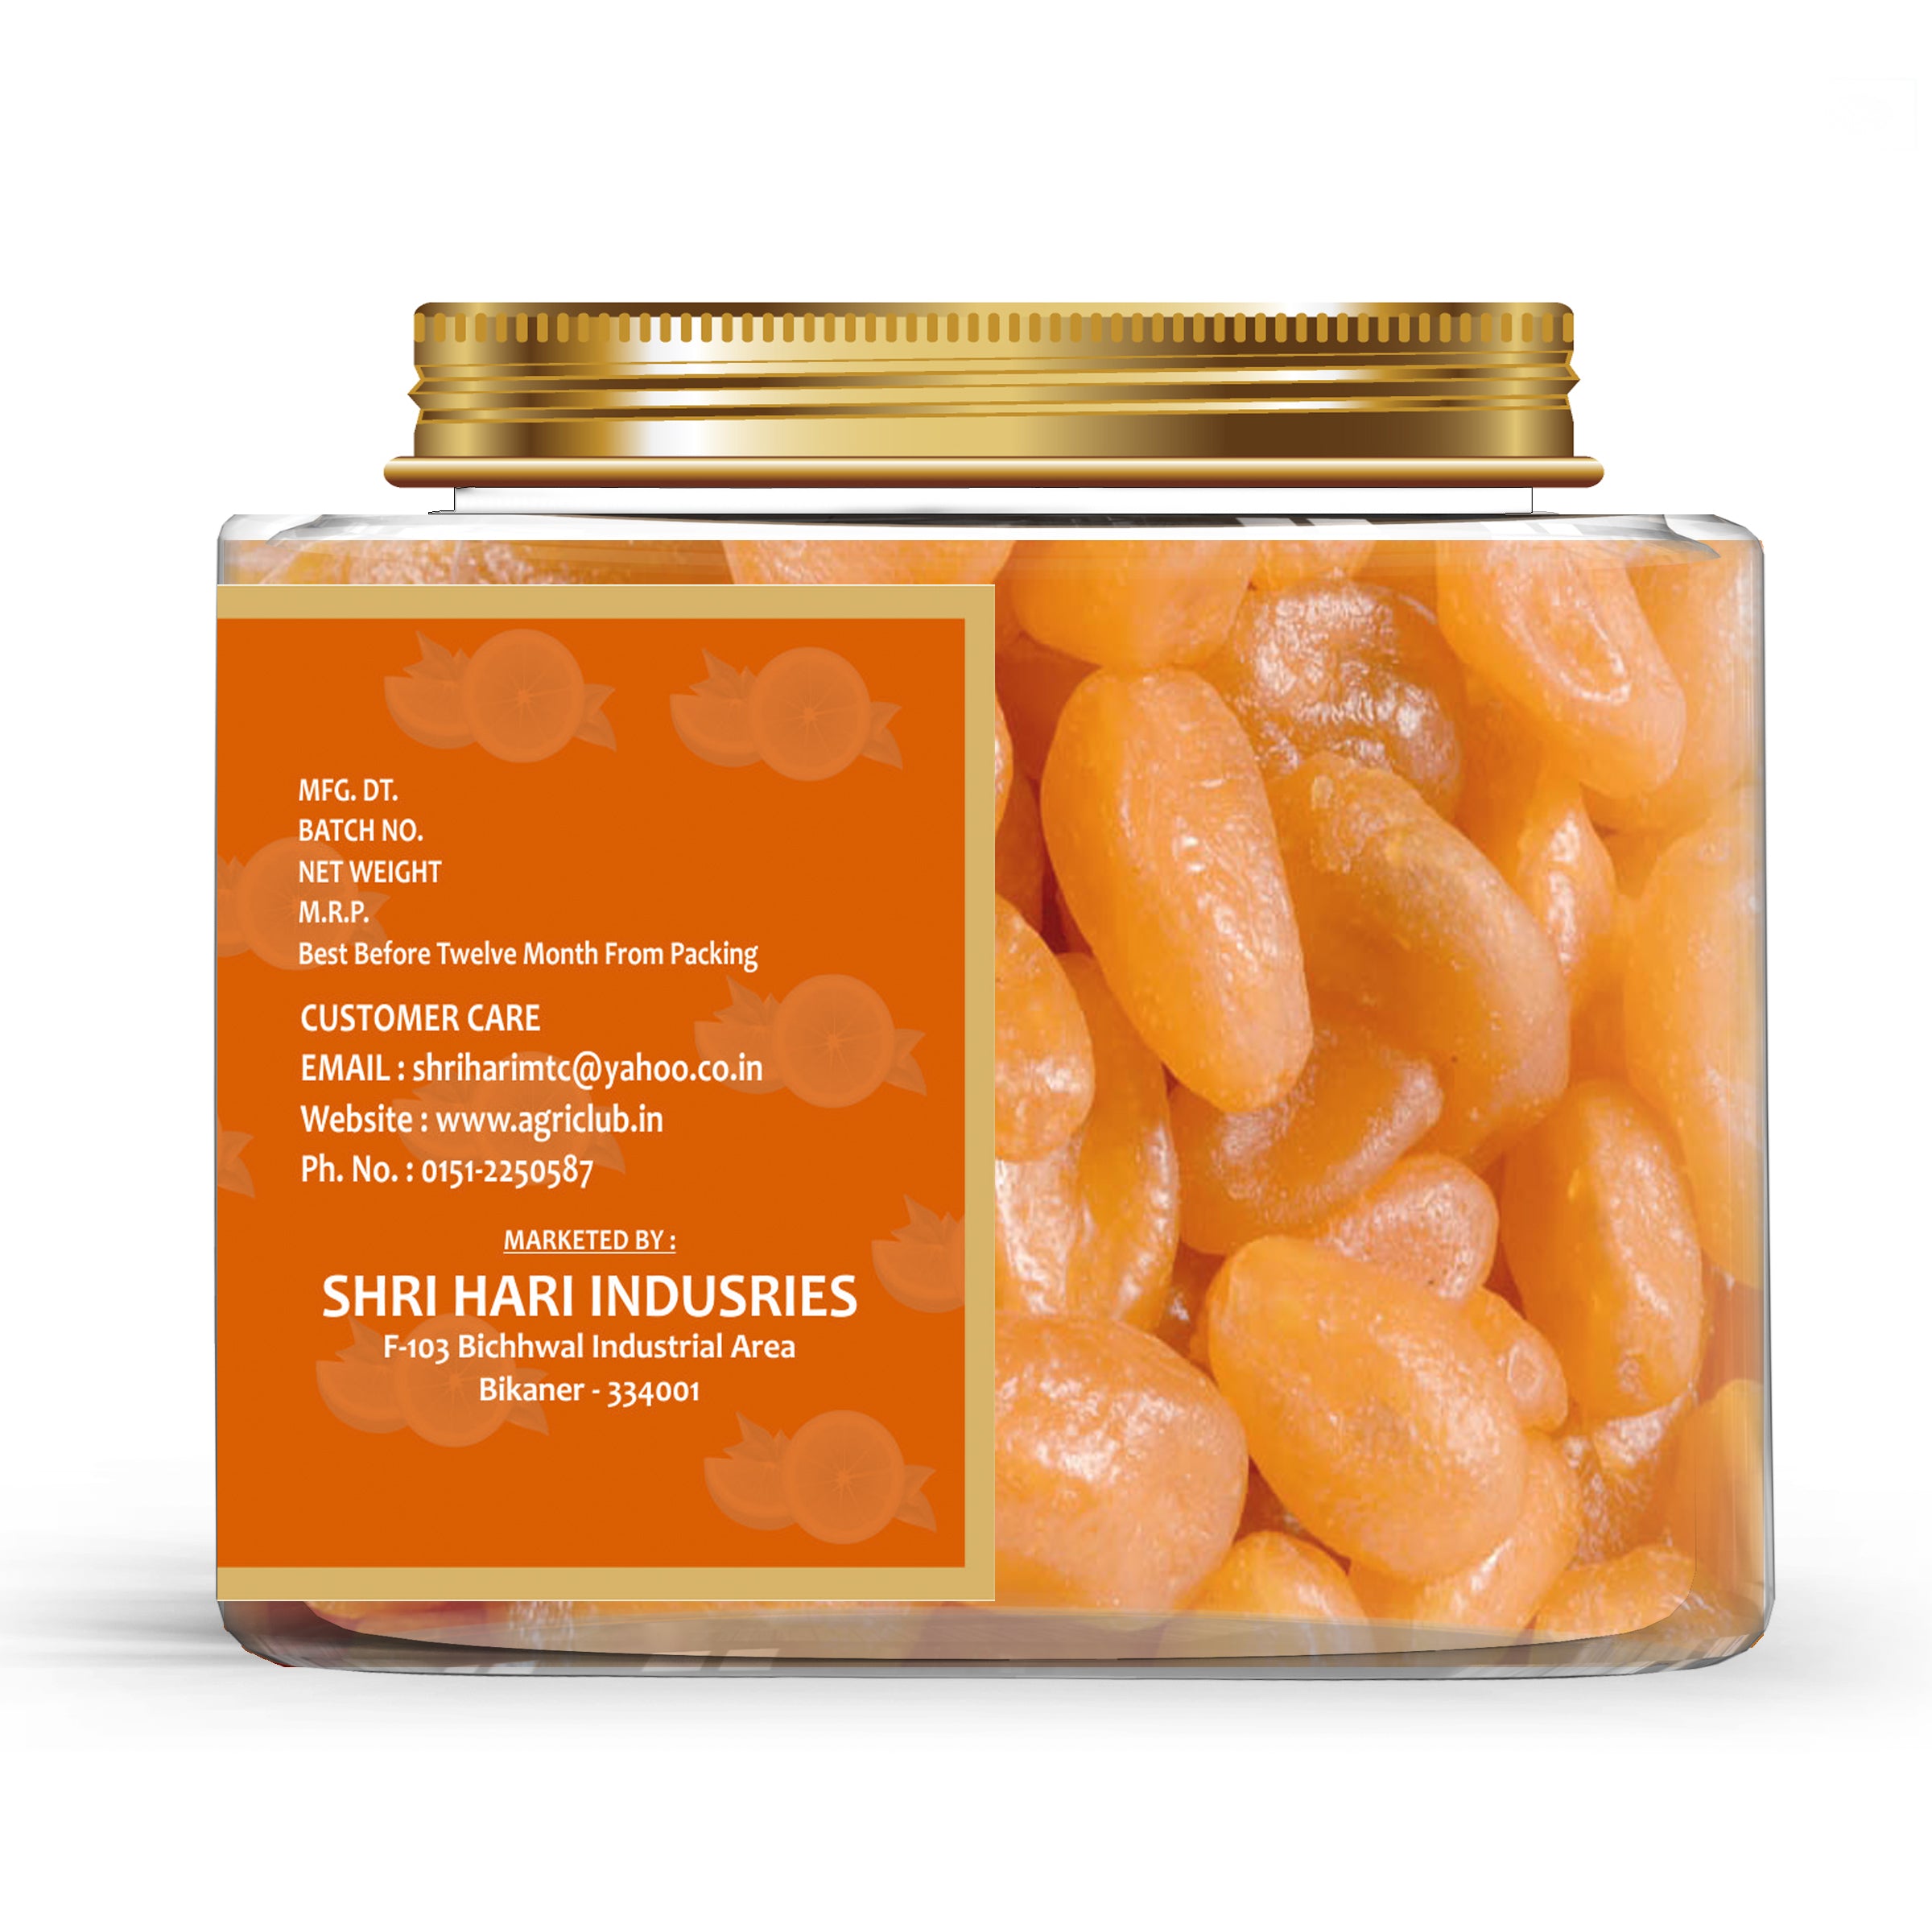 Dried Baby Orange Premium Quality 250gm